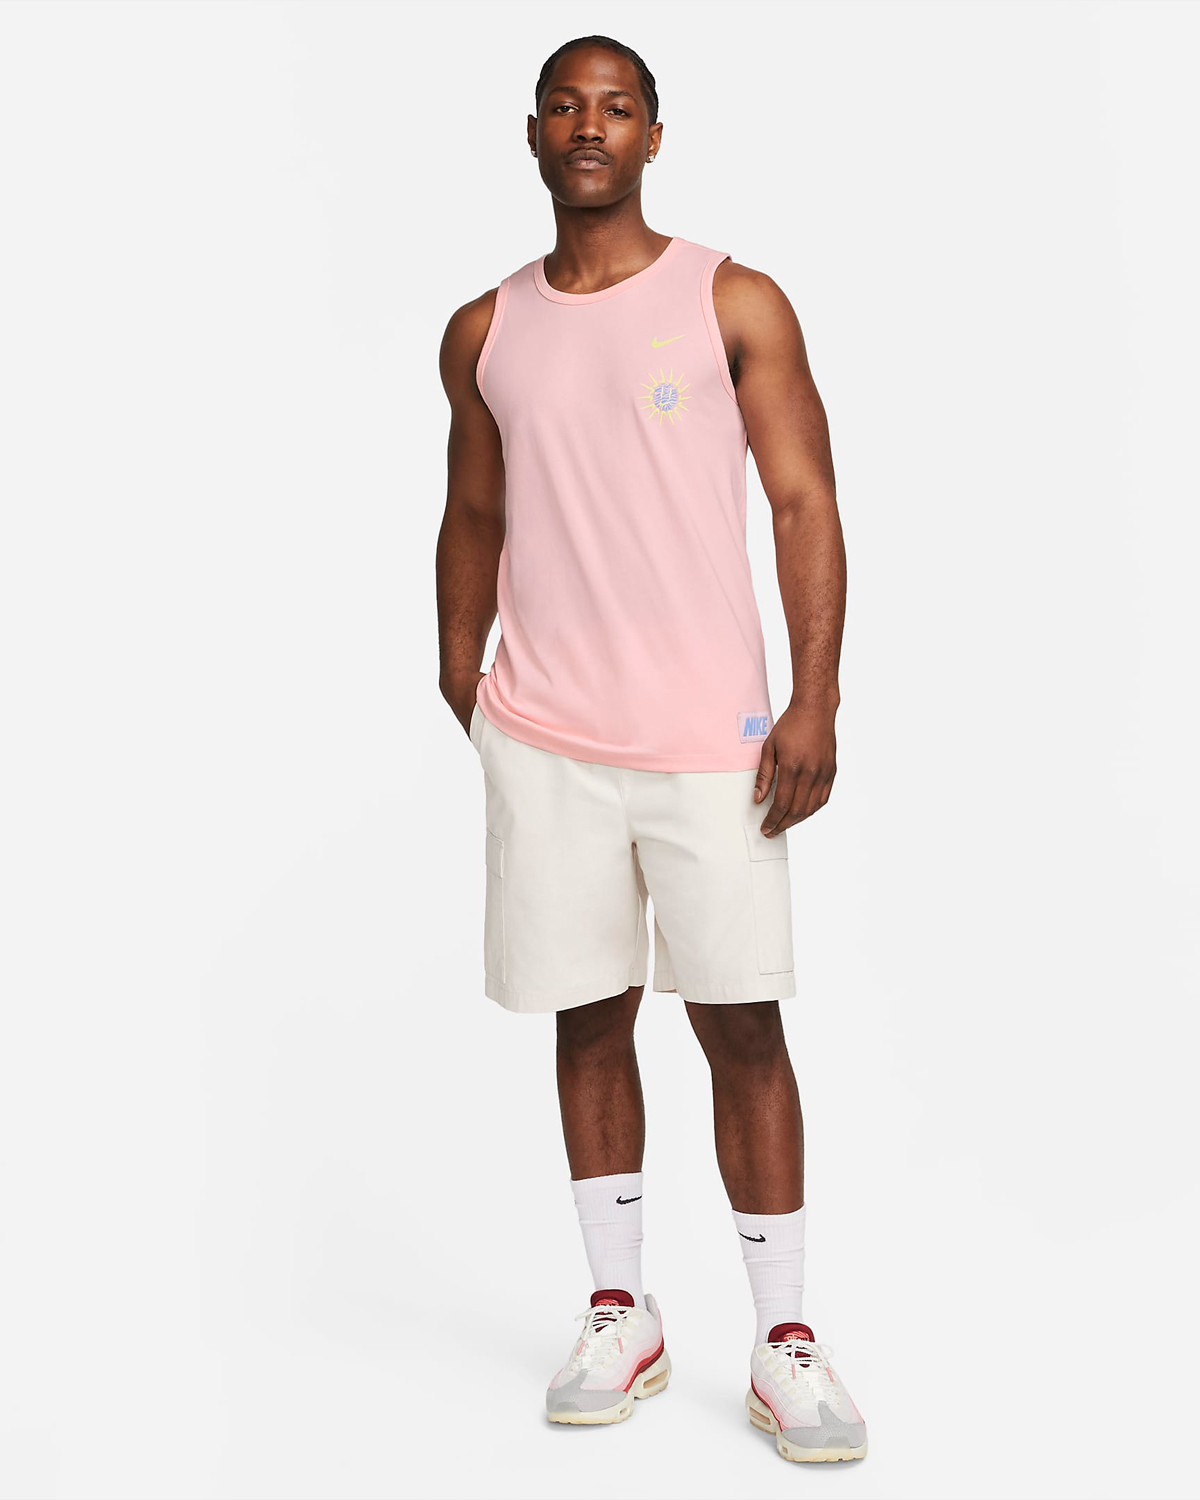 Nike-Sportswear-Trippy-Safari-Tank-Top-Pink-Bloom-Outfit